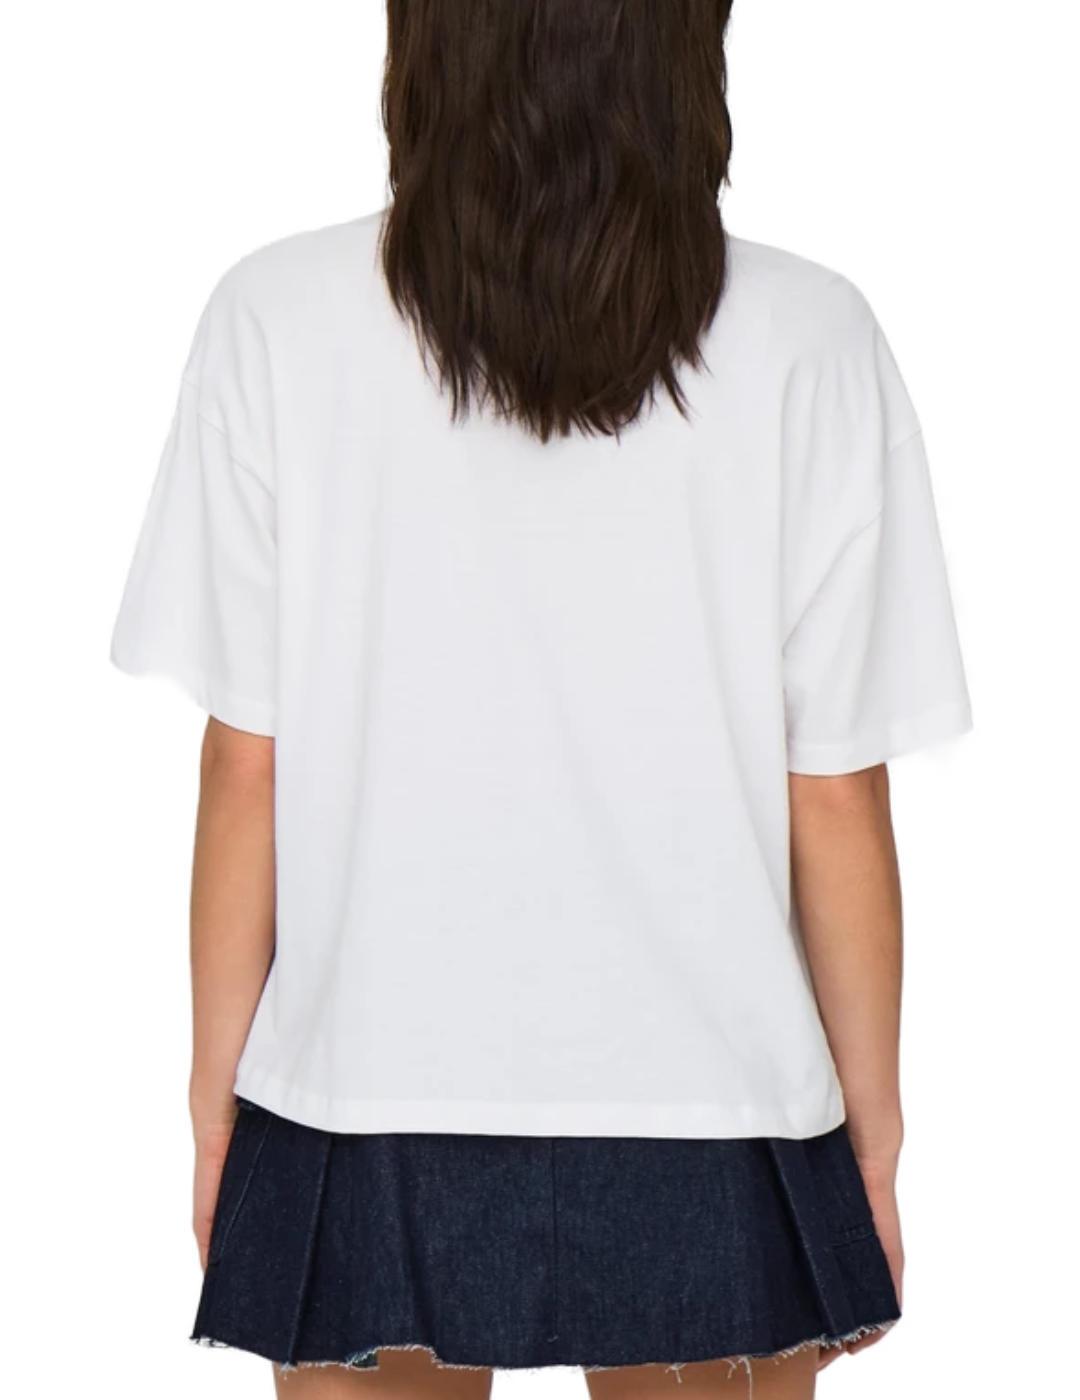 Camiseta Only Lasta blanco manga corta regular para mujer